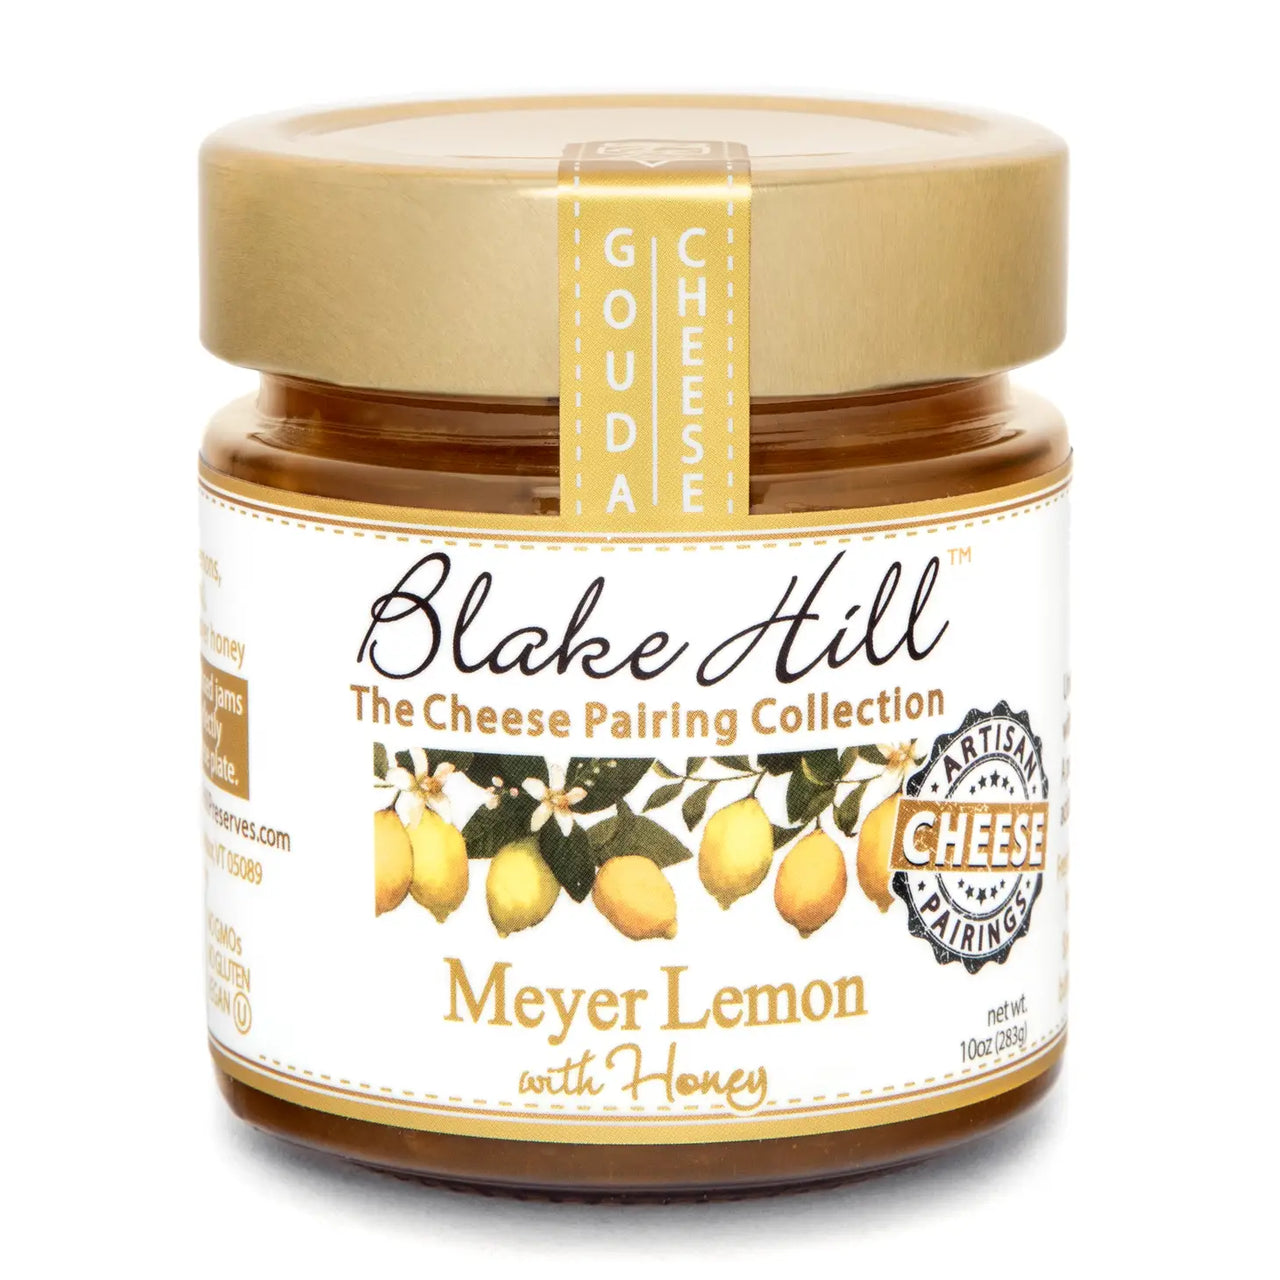 Meyer Lemon with Honey